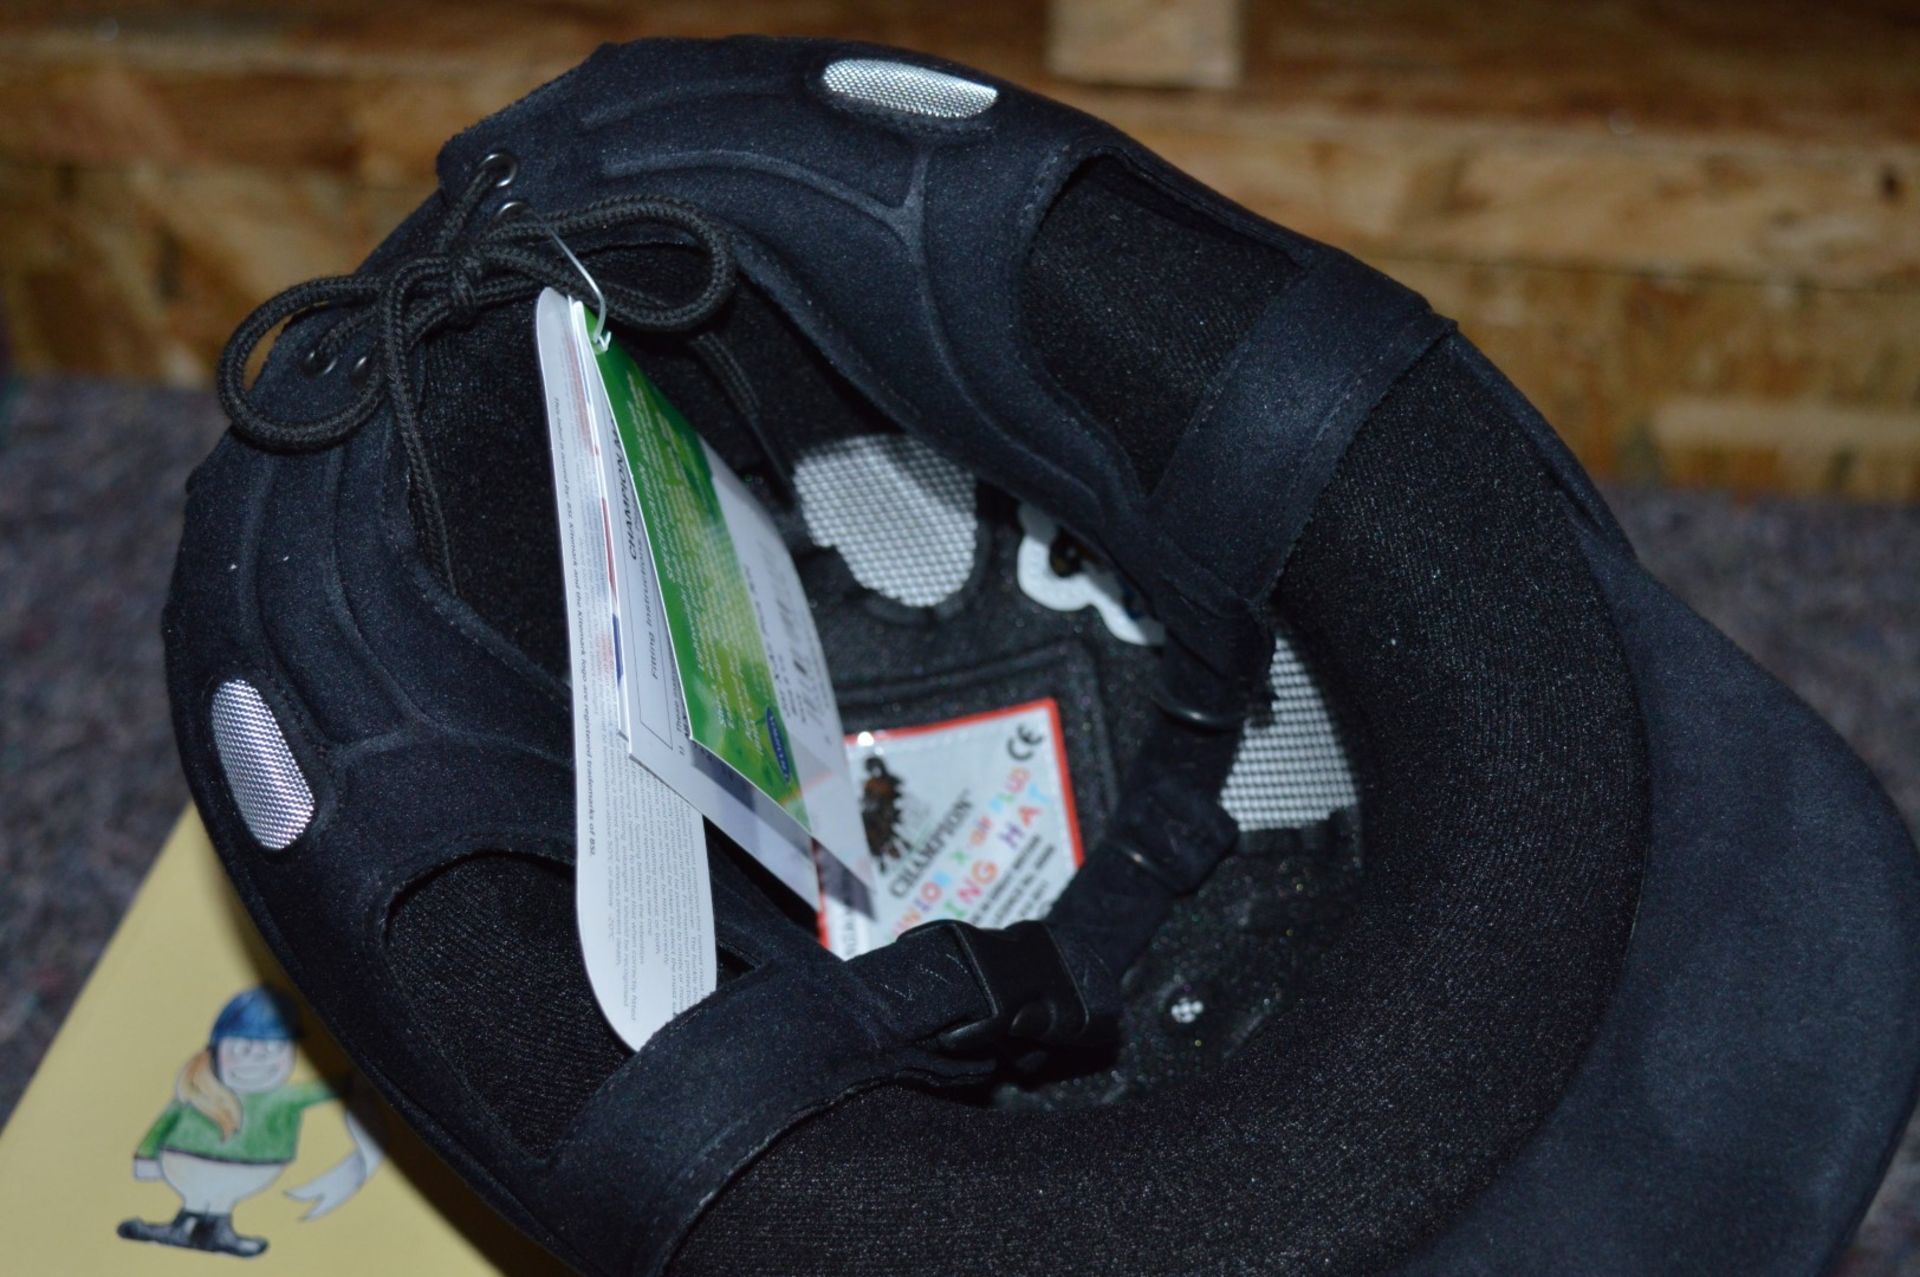 1 x Champion X-Air Junior Horse Riding Helmet in Black - Size 53cm - Ref J971 - CL401 - Ref J971 - - Image 2 of 5